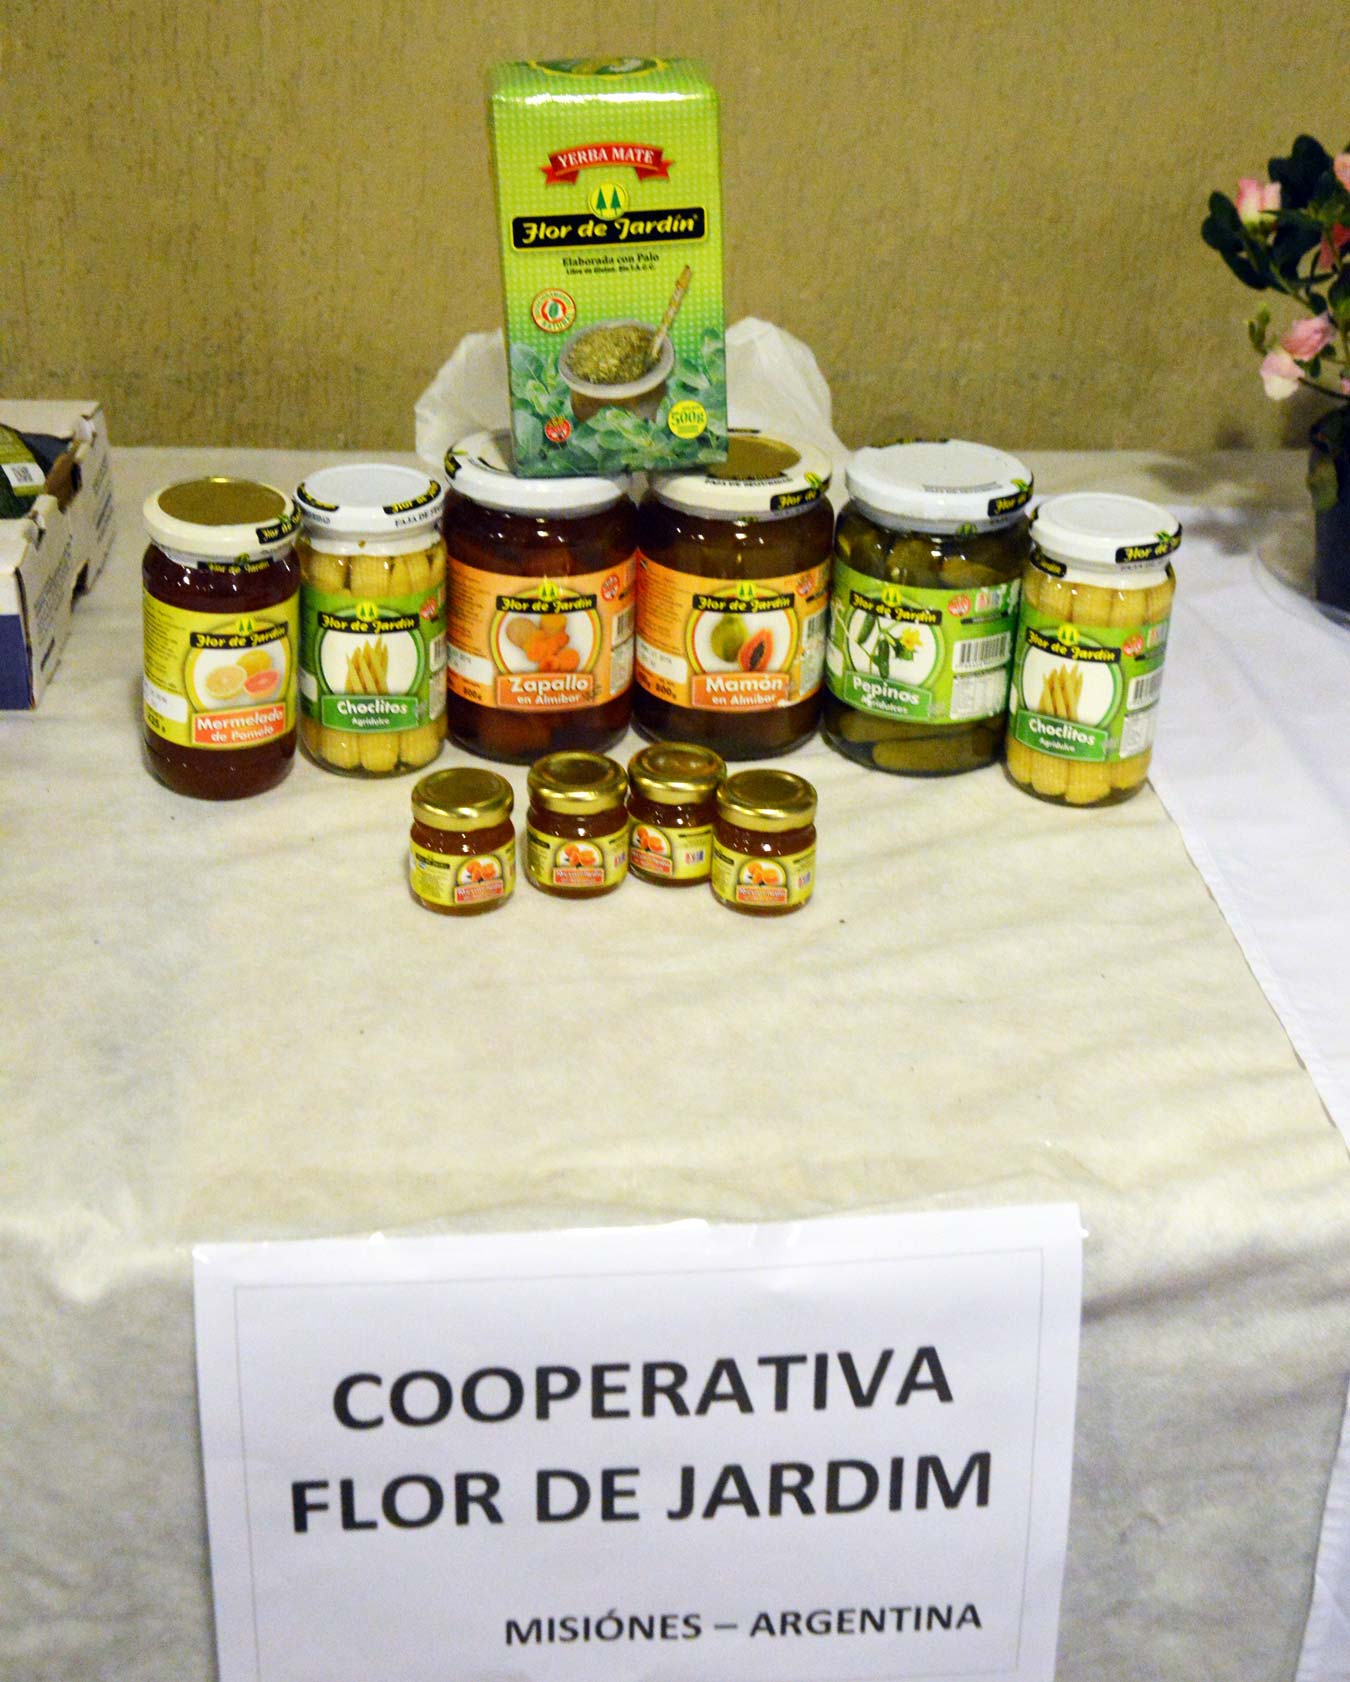 Missiónes na Argentina apresenta produtos em conserva. (Foto: Luci Judice Yizima)